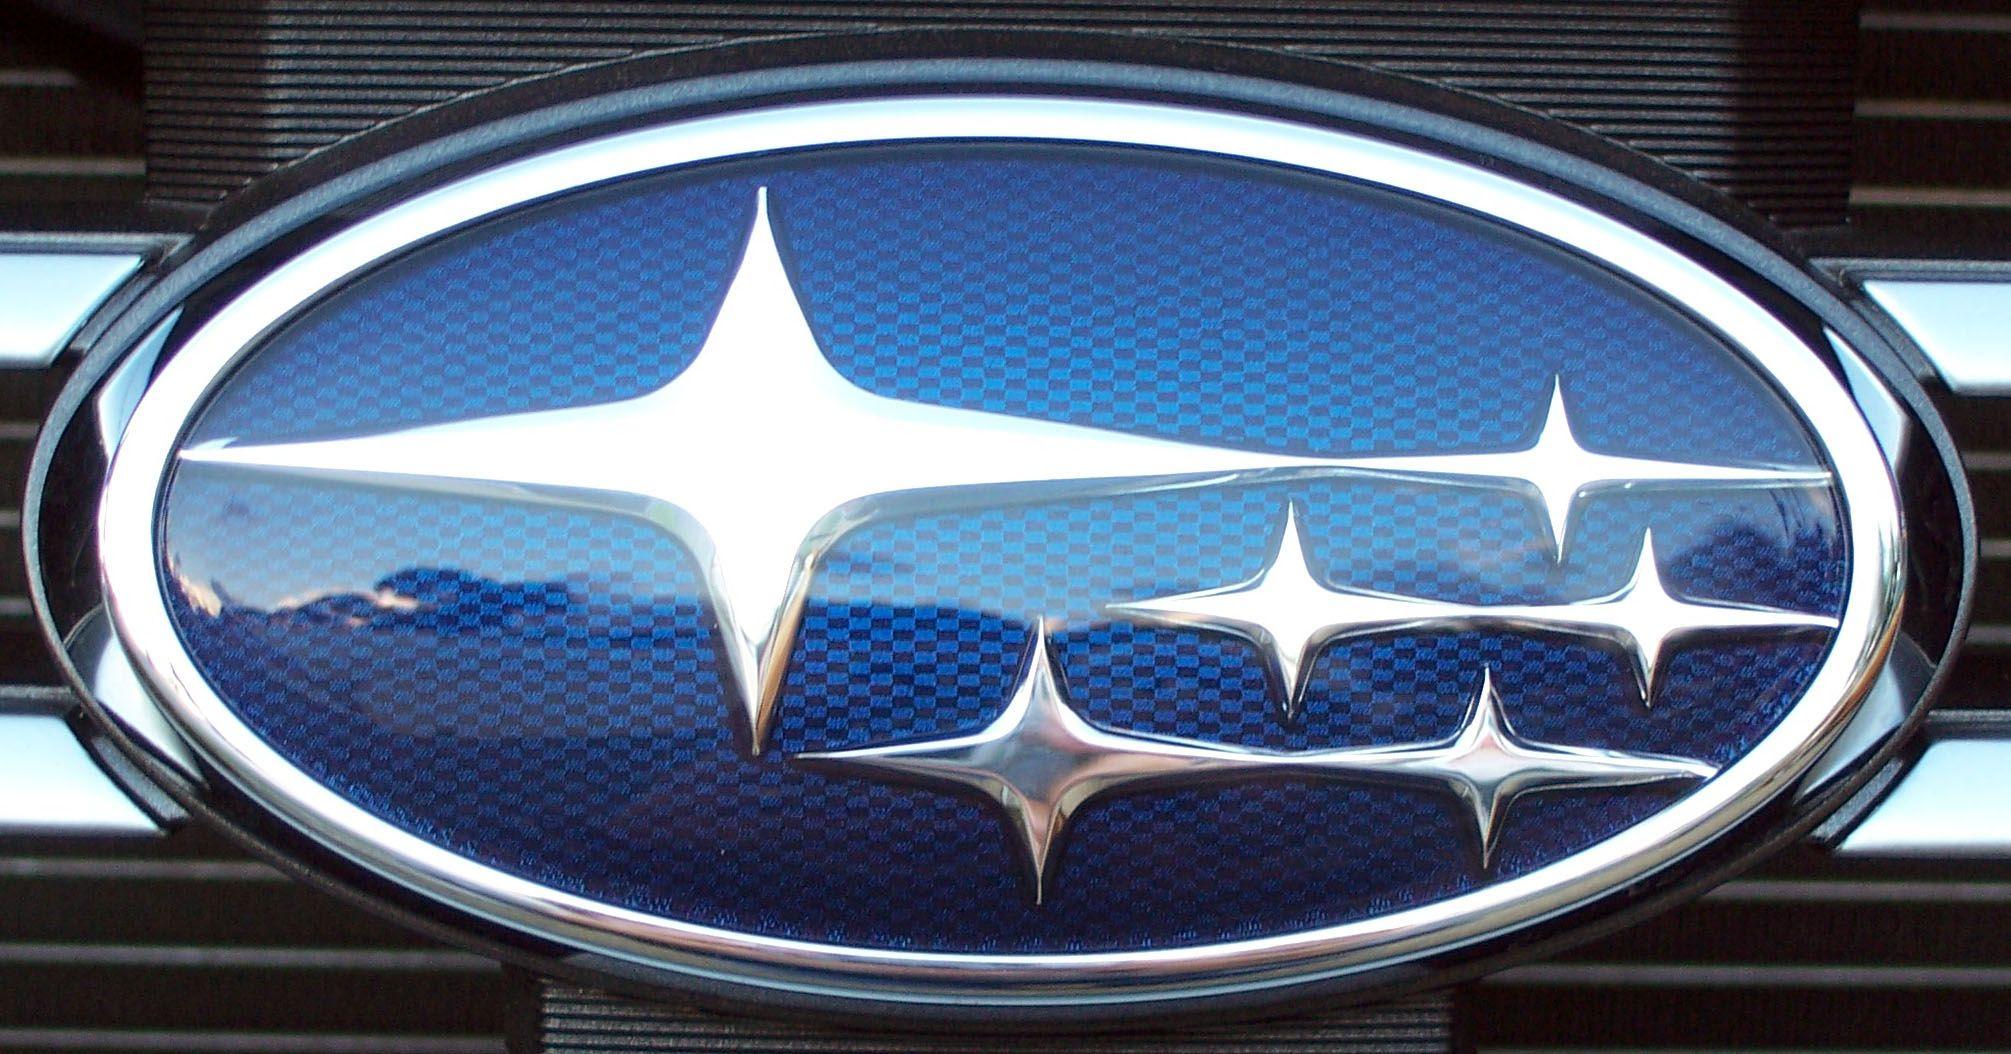 Subaru Stars Logo - Subaru Logo, Subaru Car Symbol Meaning and History | Car Brand Names.com